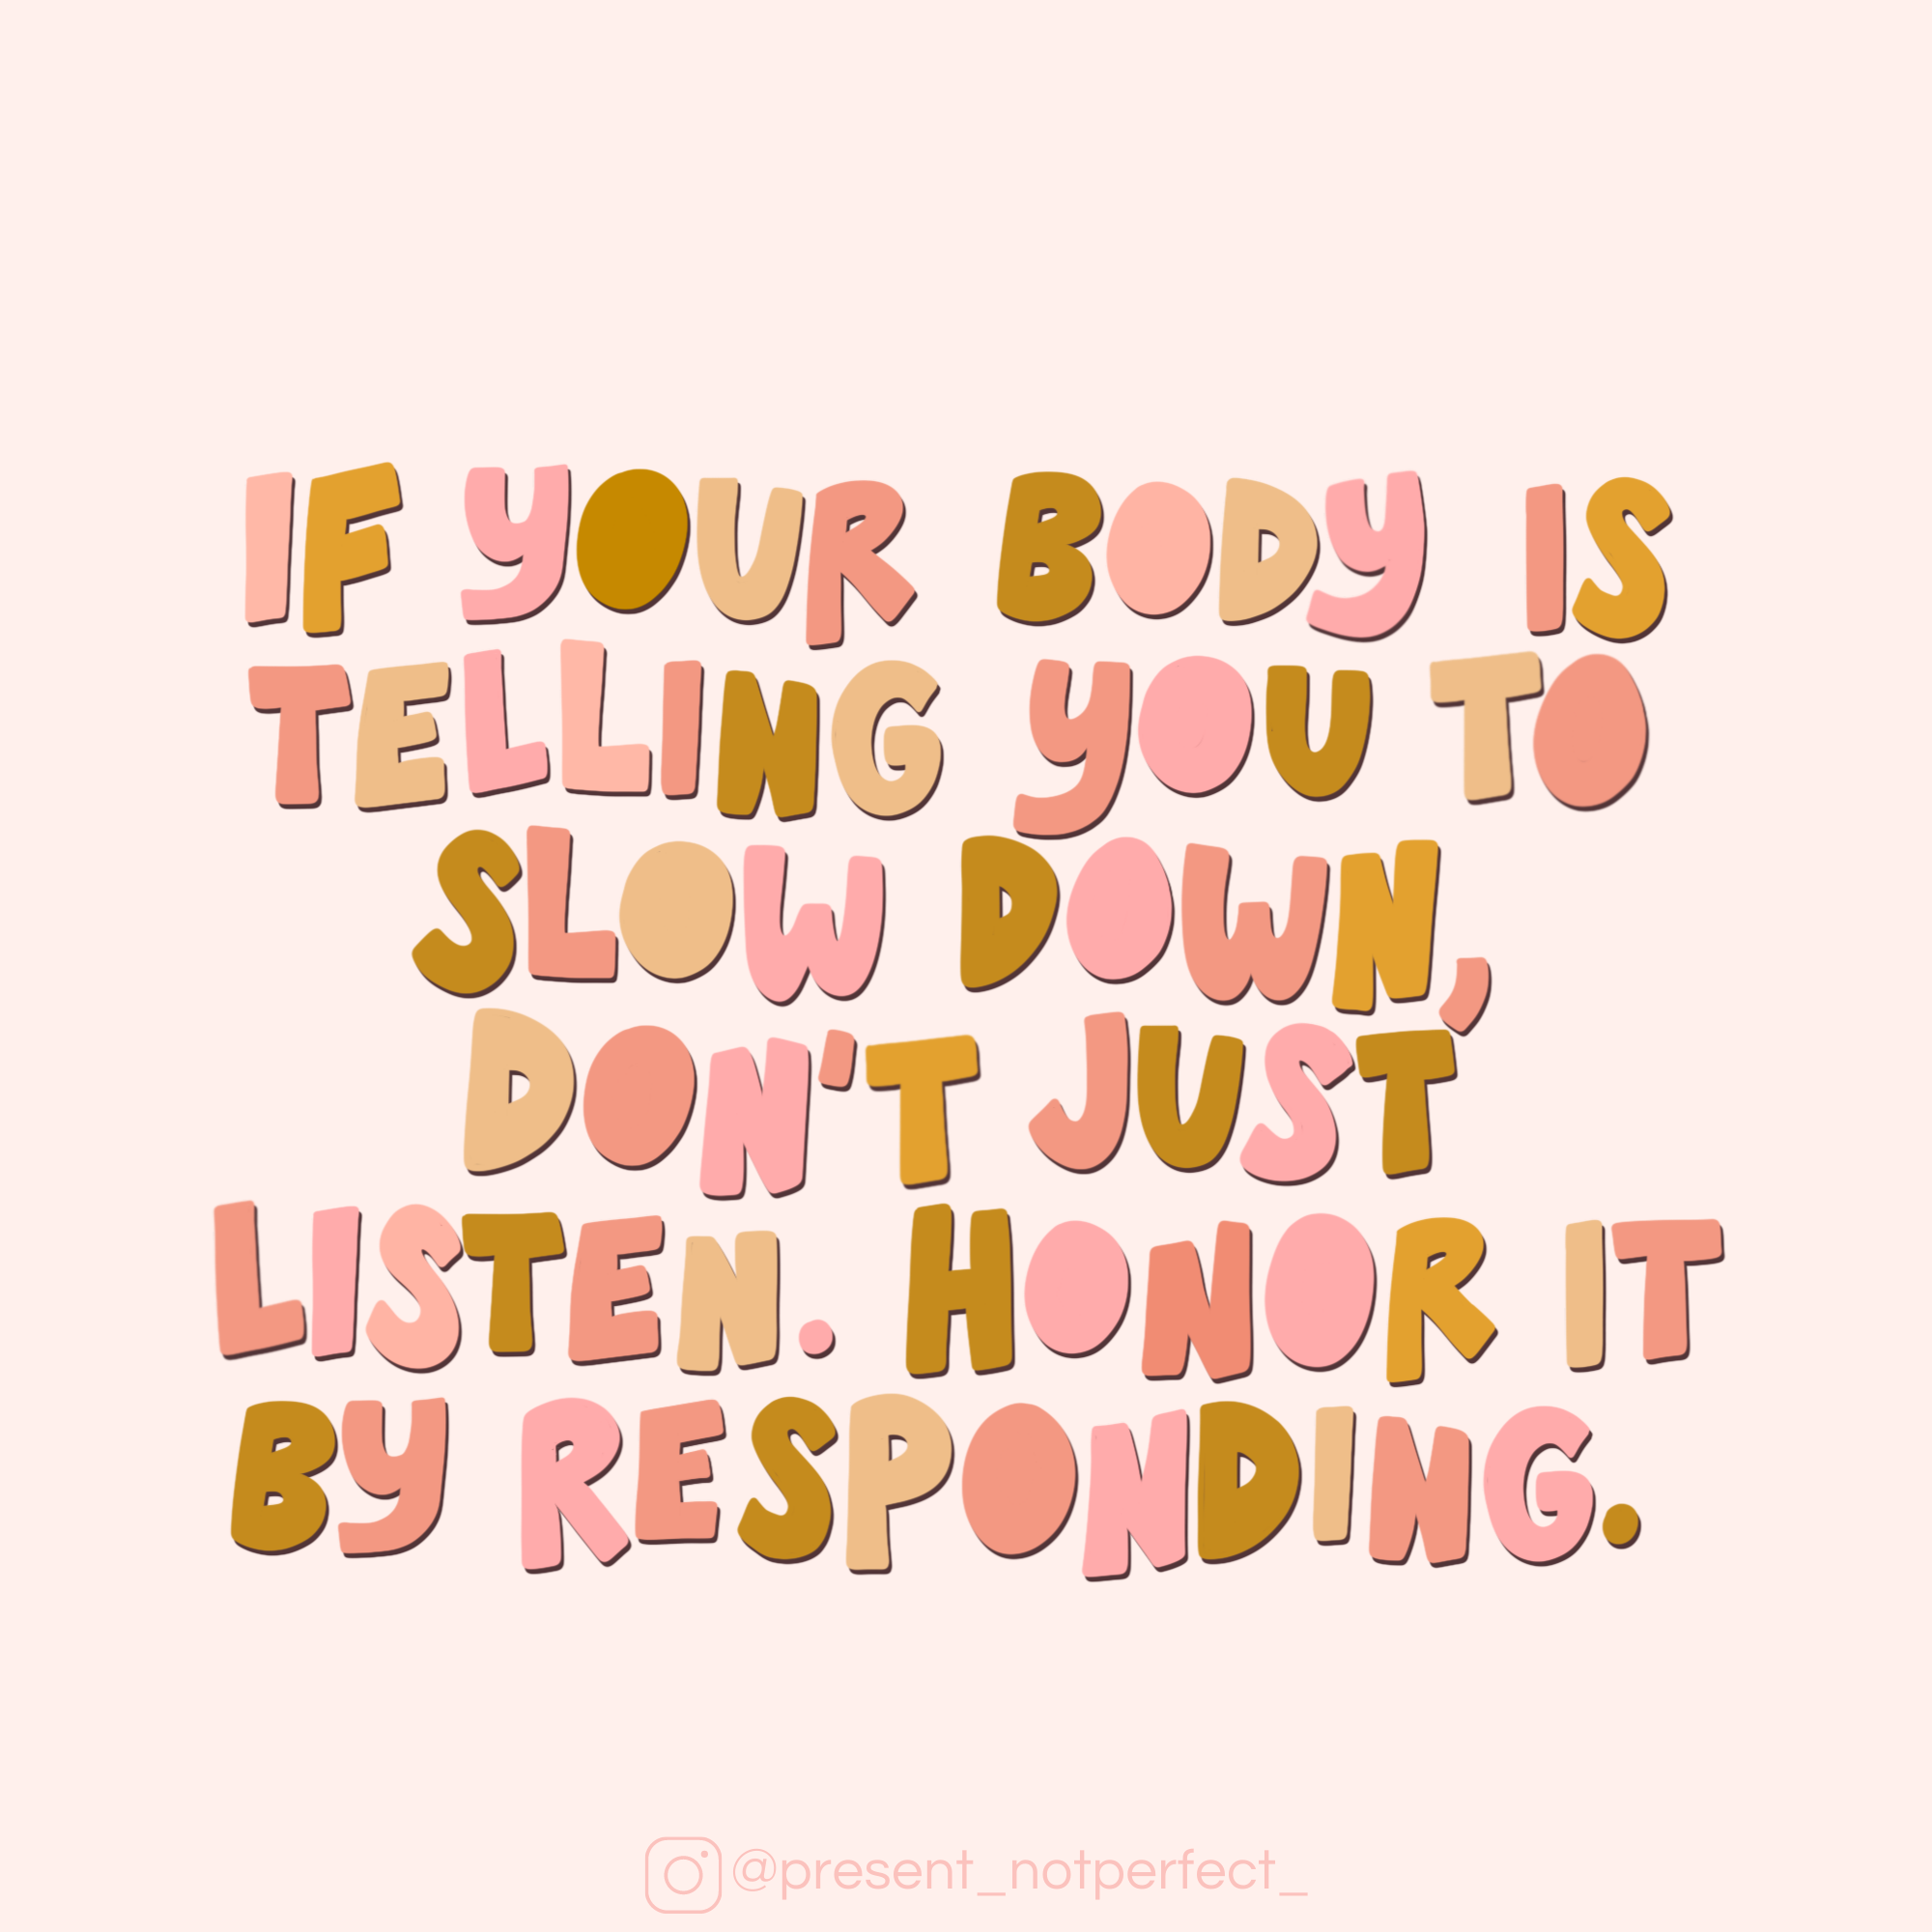 Listen & Honor Your Body